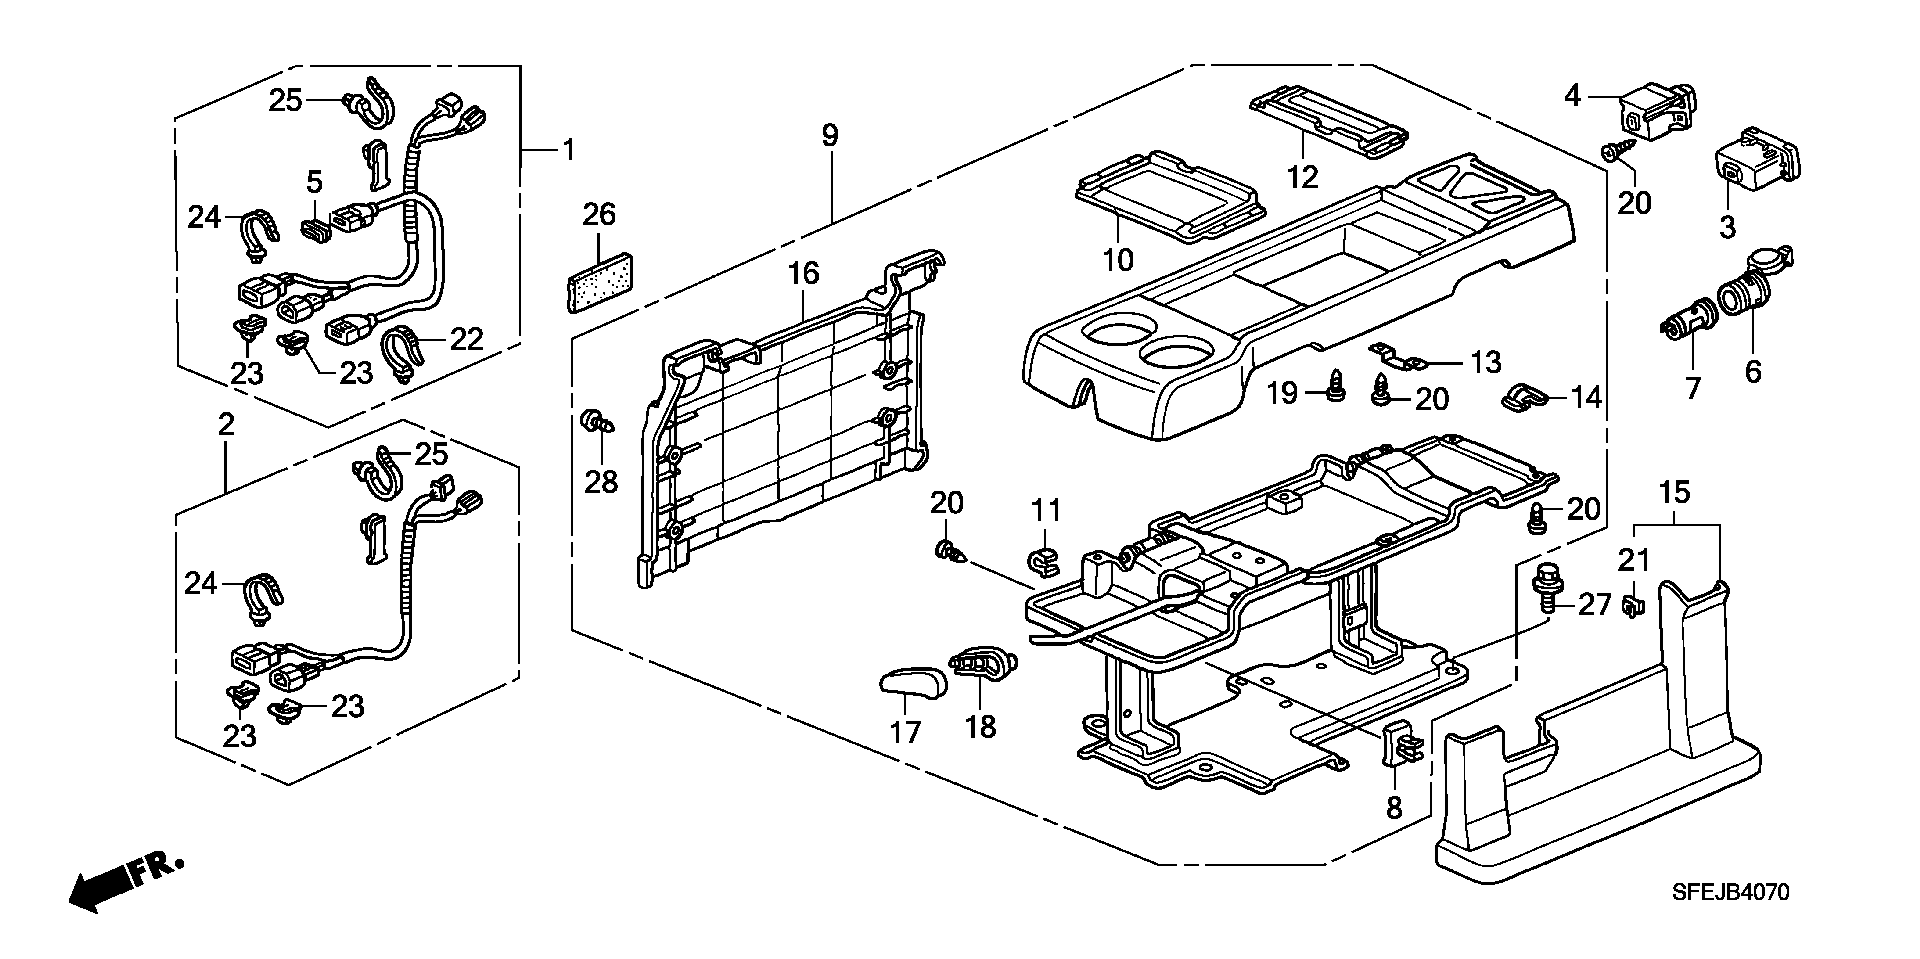 CENTER TABLE(1)